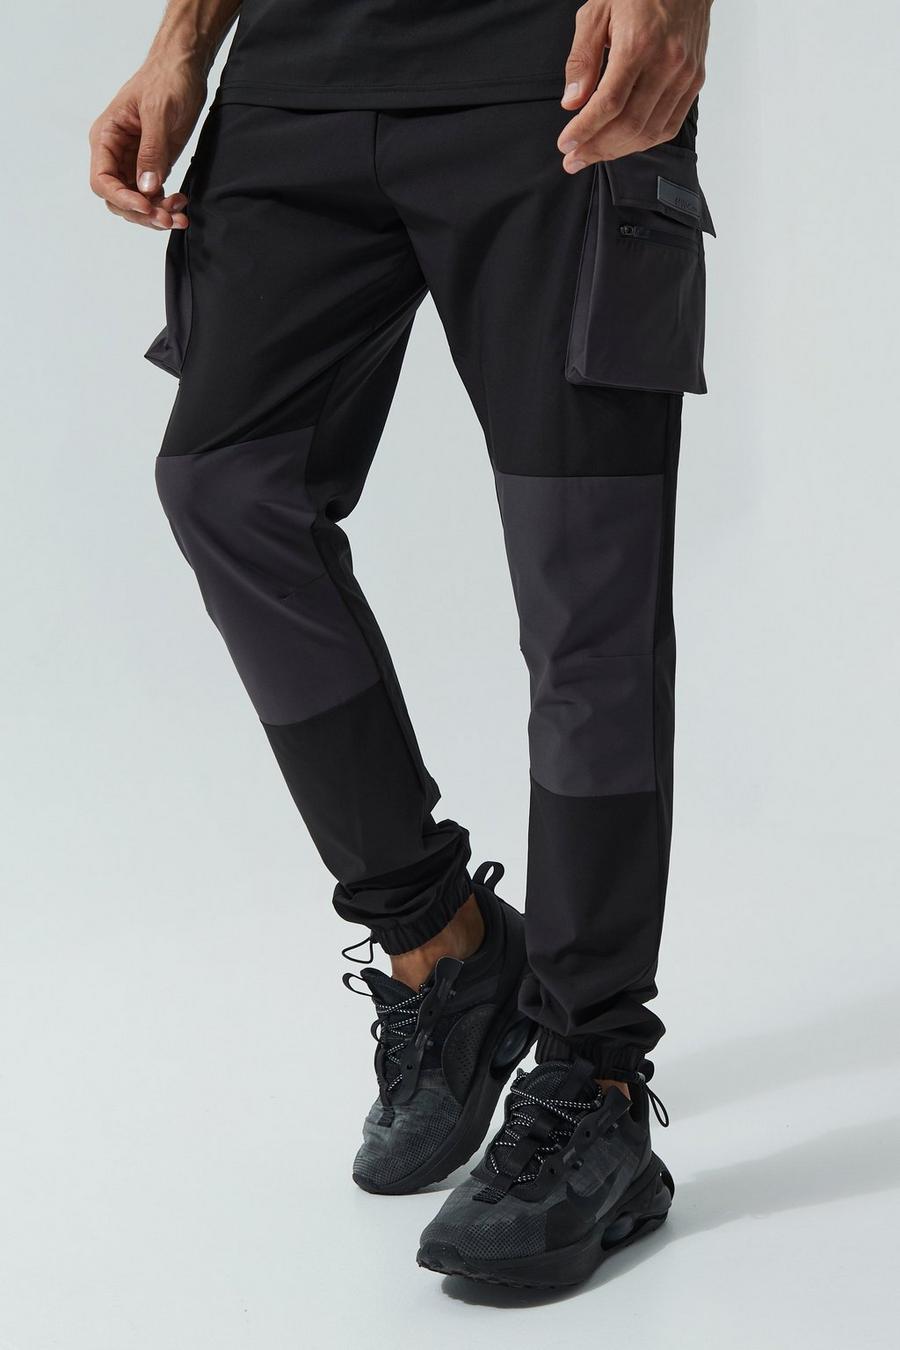 Pantalones Tall cargo MAN Active con colores en bloque, Black negro